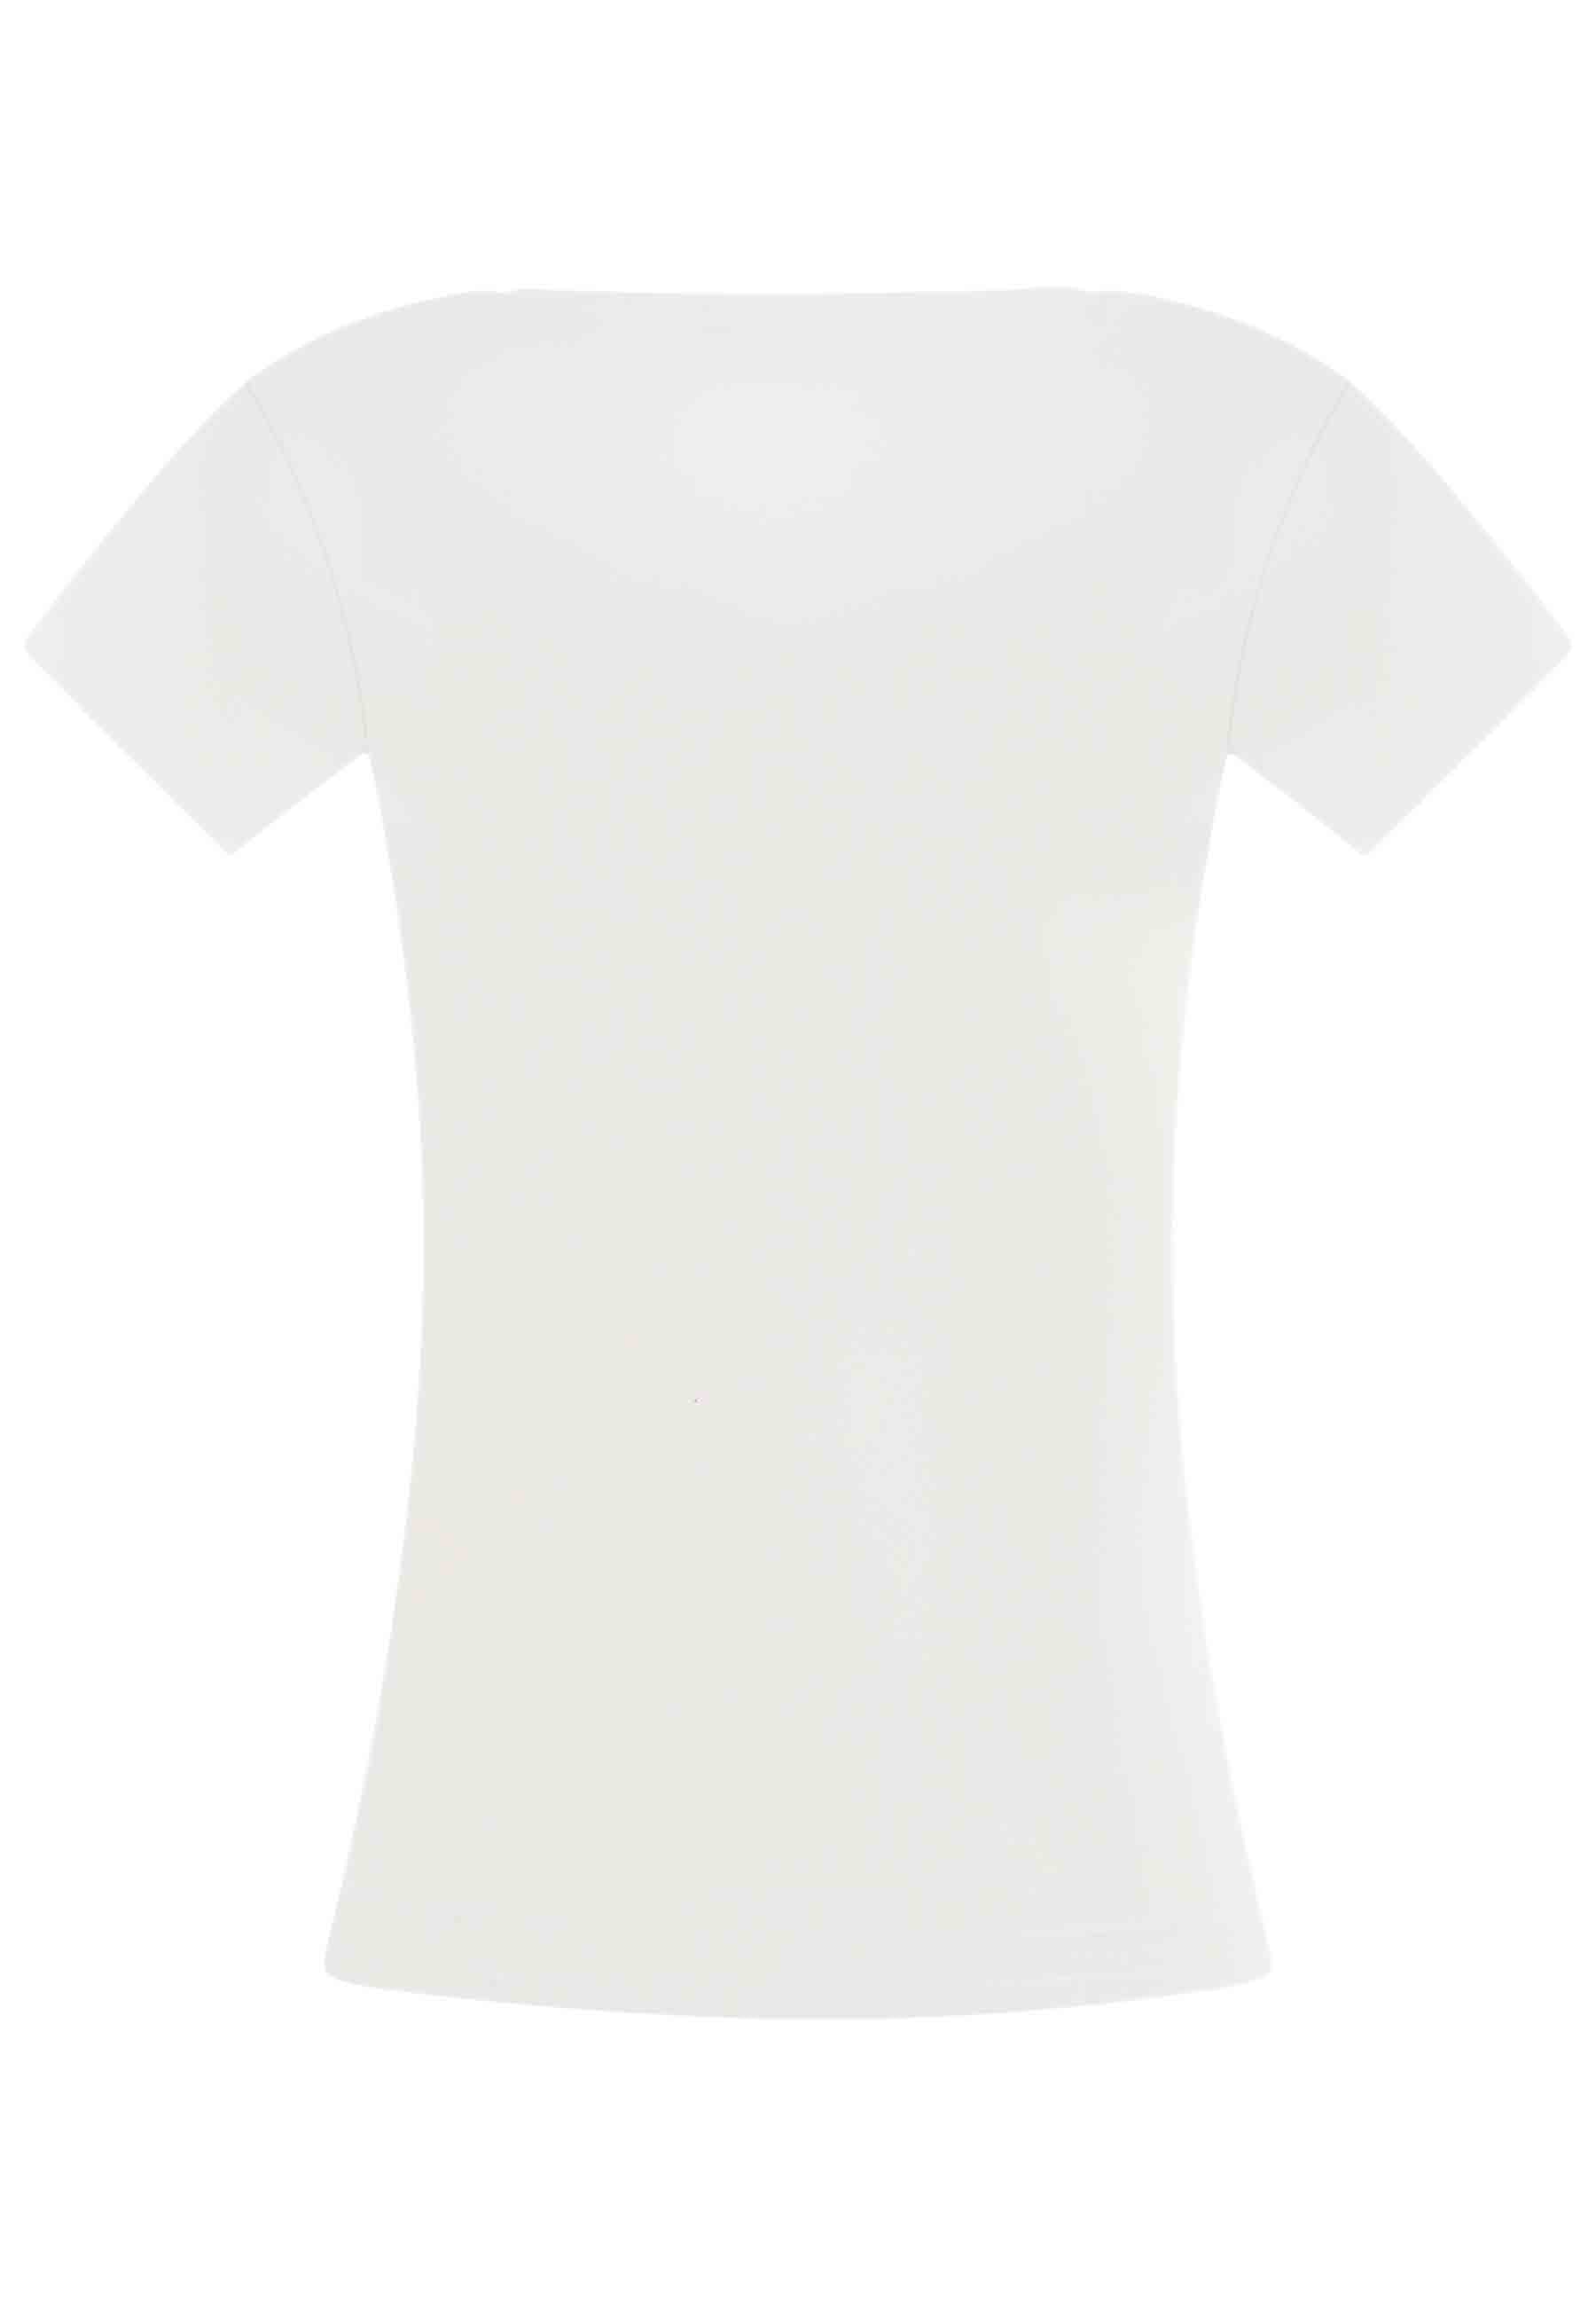 T-shirt donna Icons in cotone bianco con stampa in seta